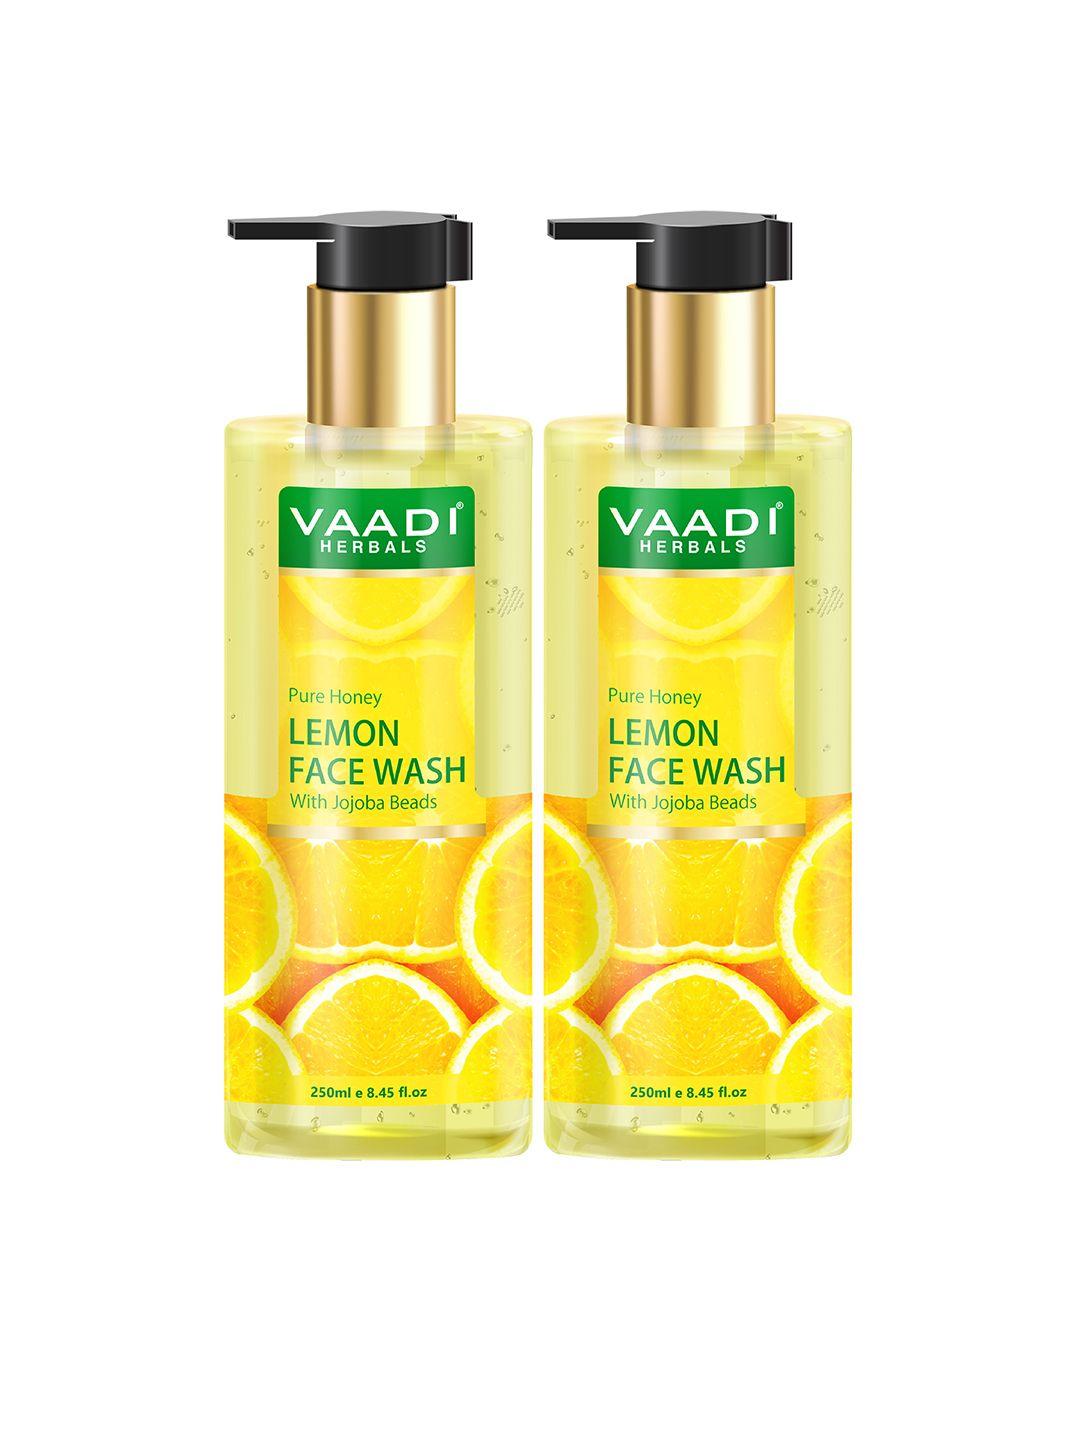 vaadi herbals set of 2 pure honey lemon face wash with jojoba beads - 250 ml each